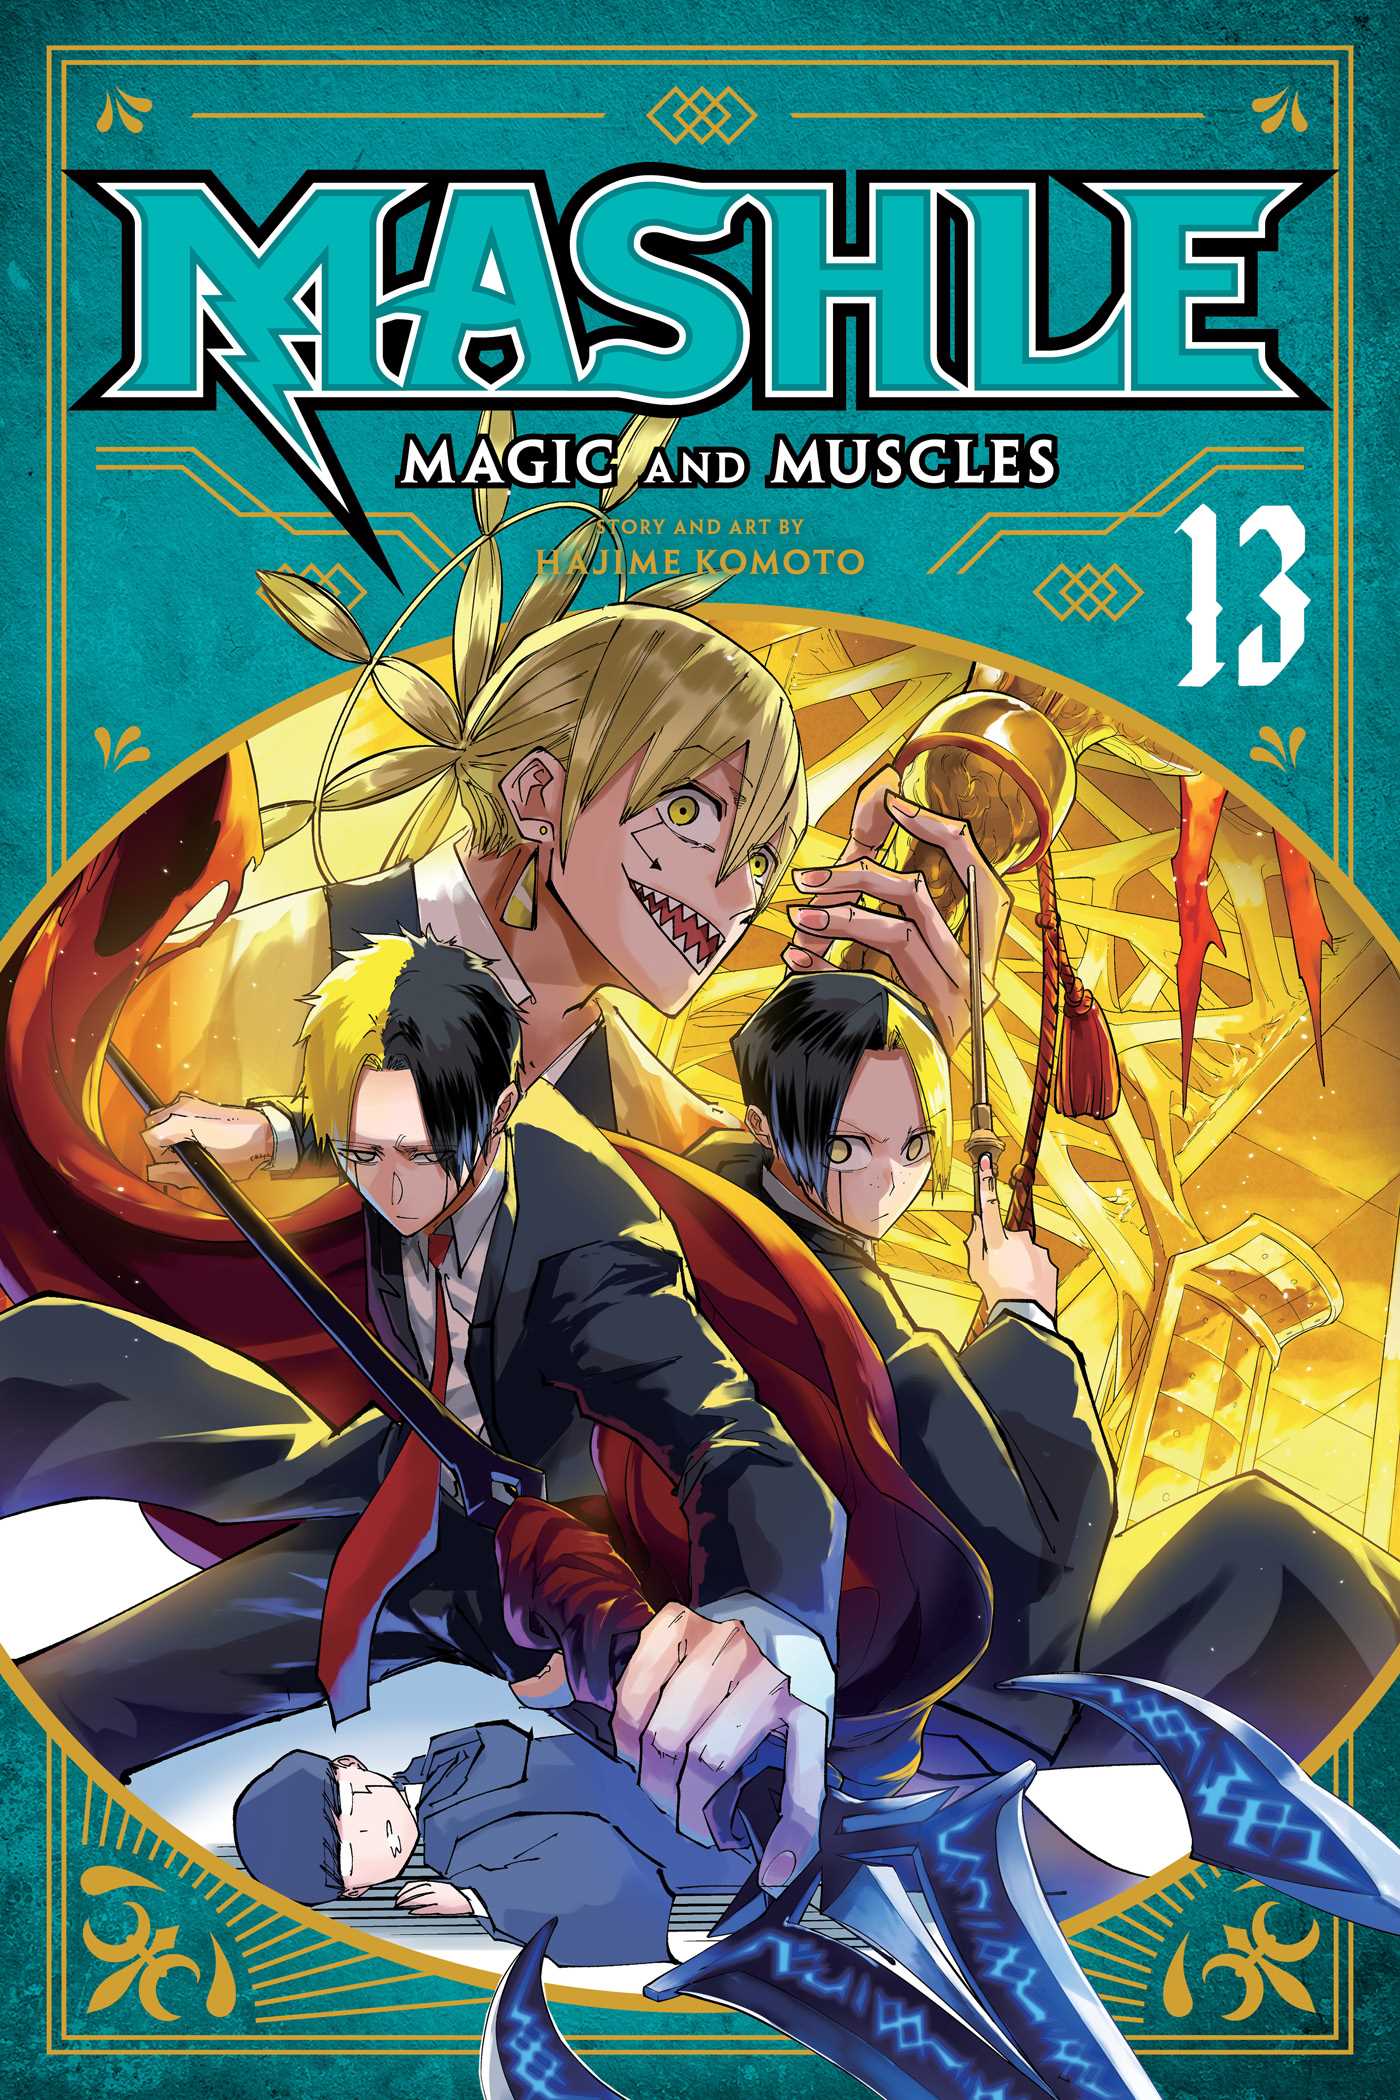 Mashle: Magic and Muscles Vol. 13 | Komoto, Hajime (Auteur)